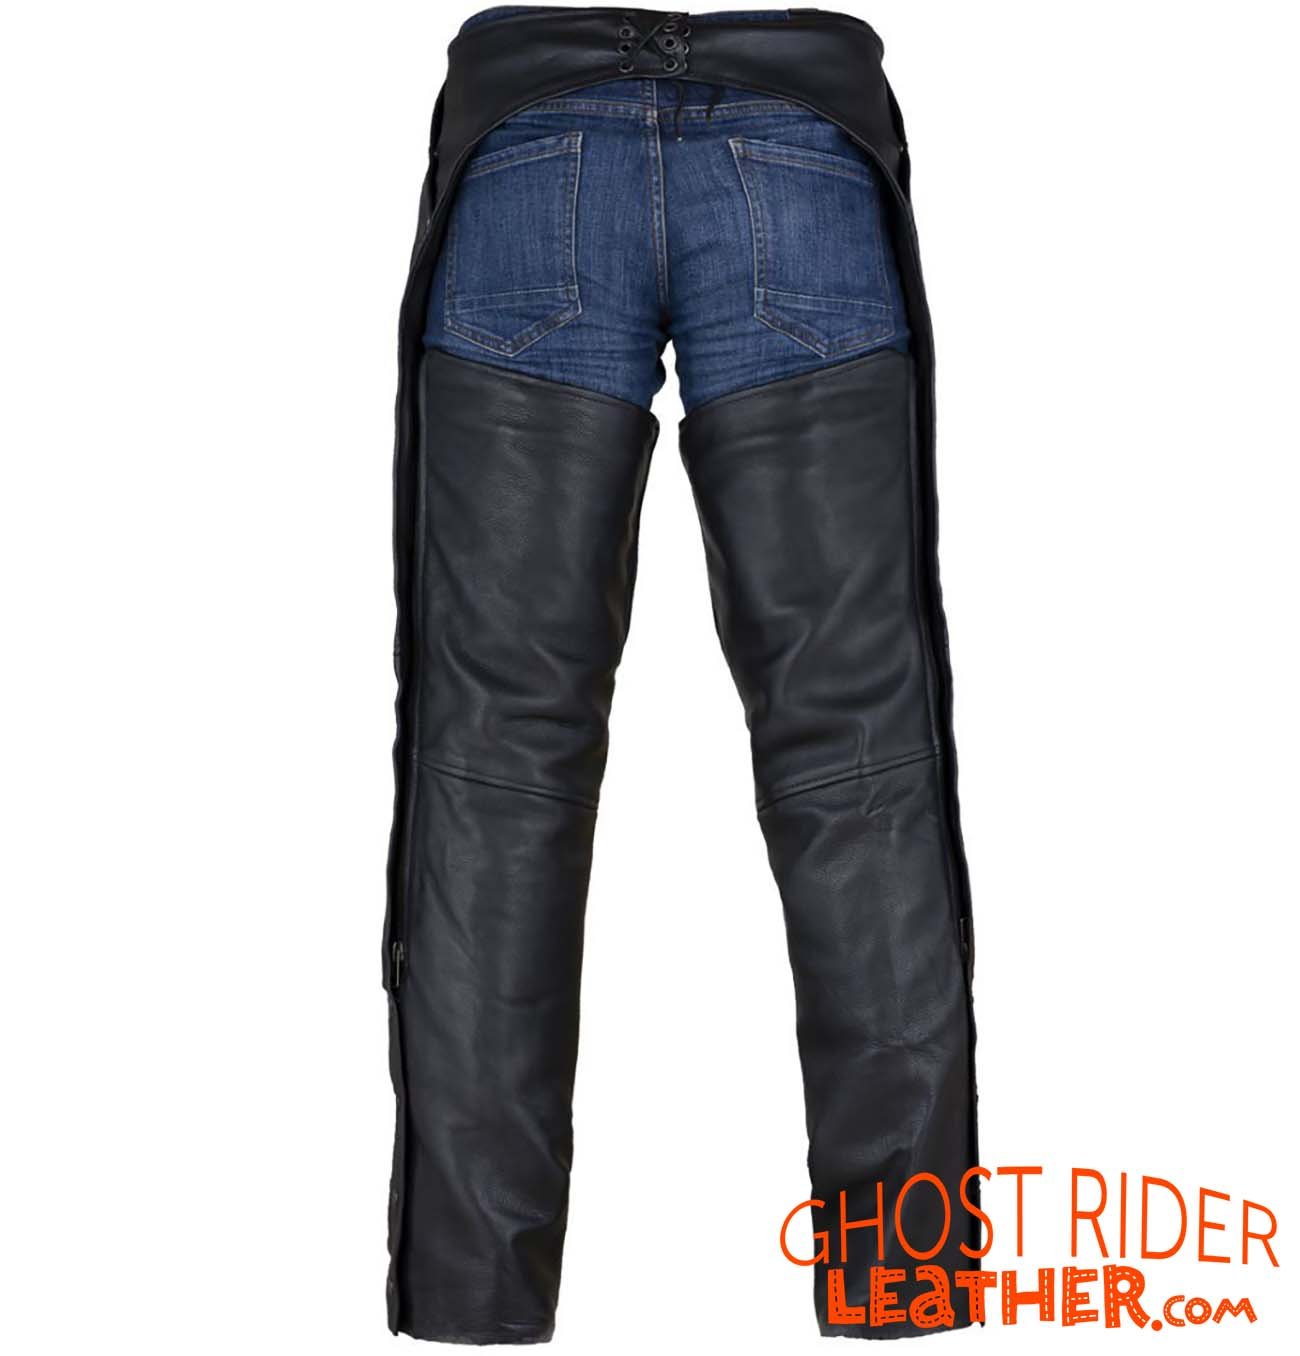 Leather Chaps - Men's or Women's - Removable Liner - Split Leather - C4334-04-DL